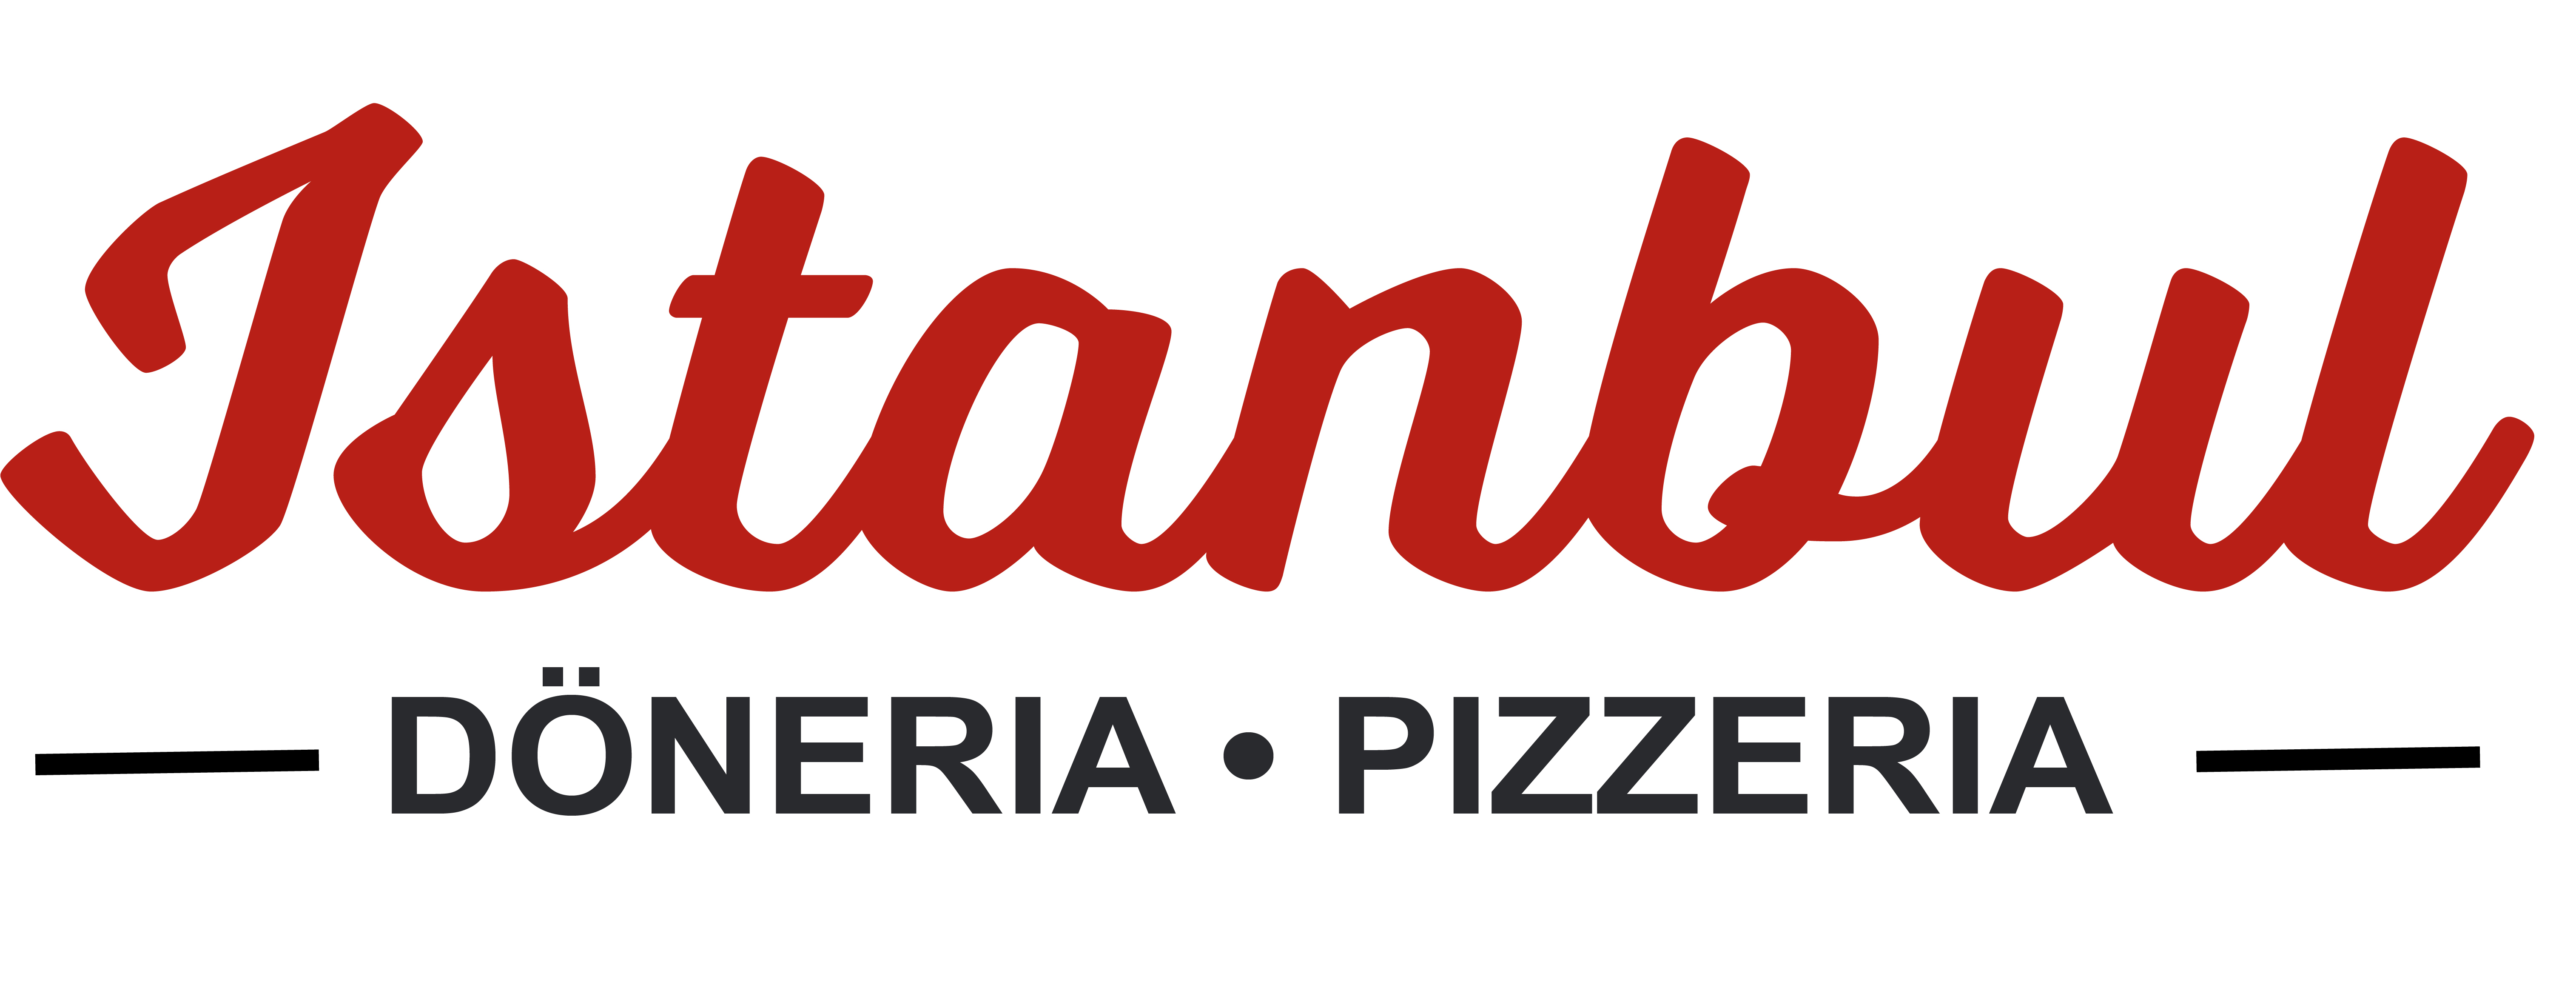 Istanbul Döneria und Pizzeria